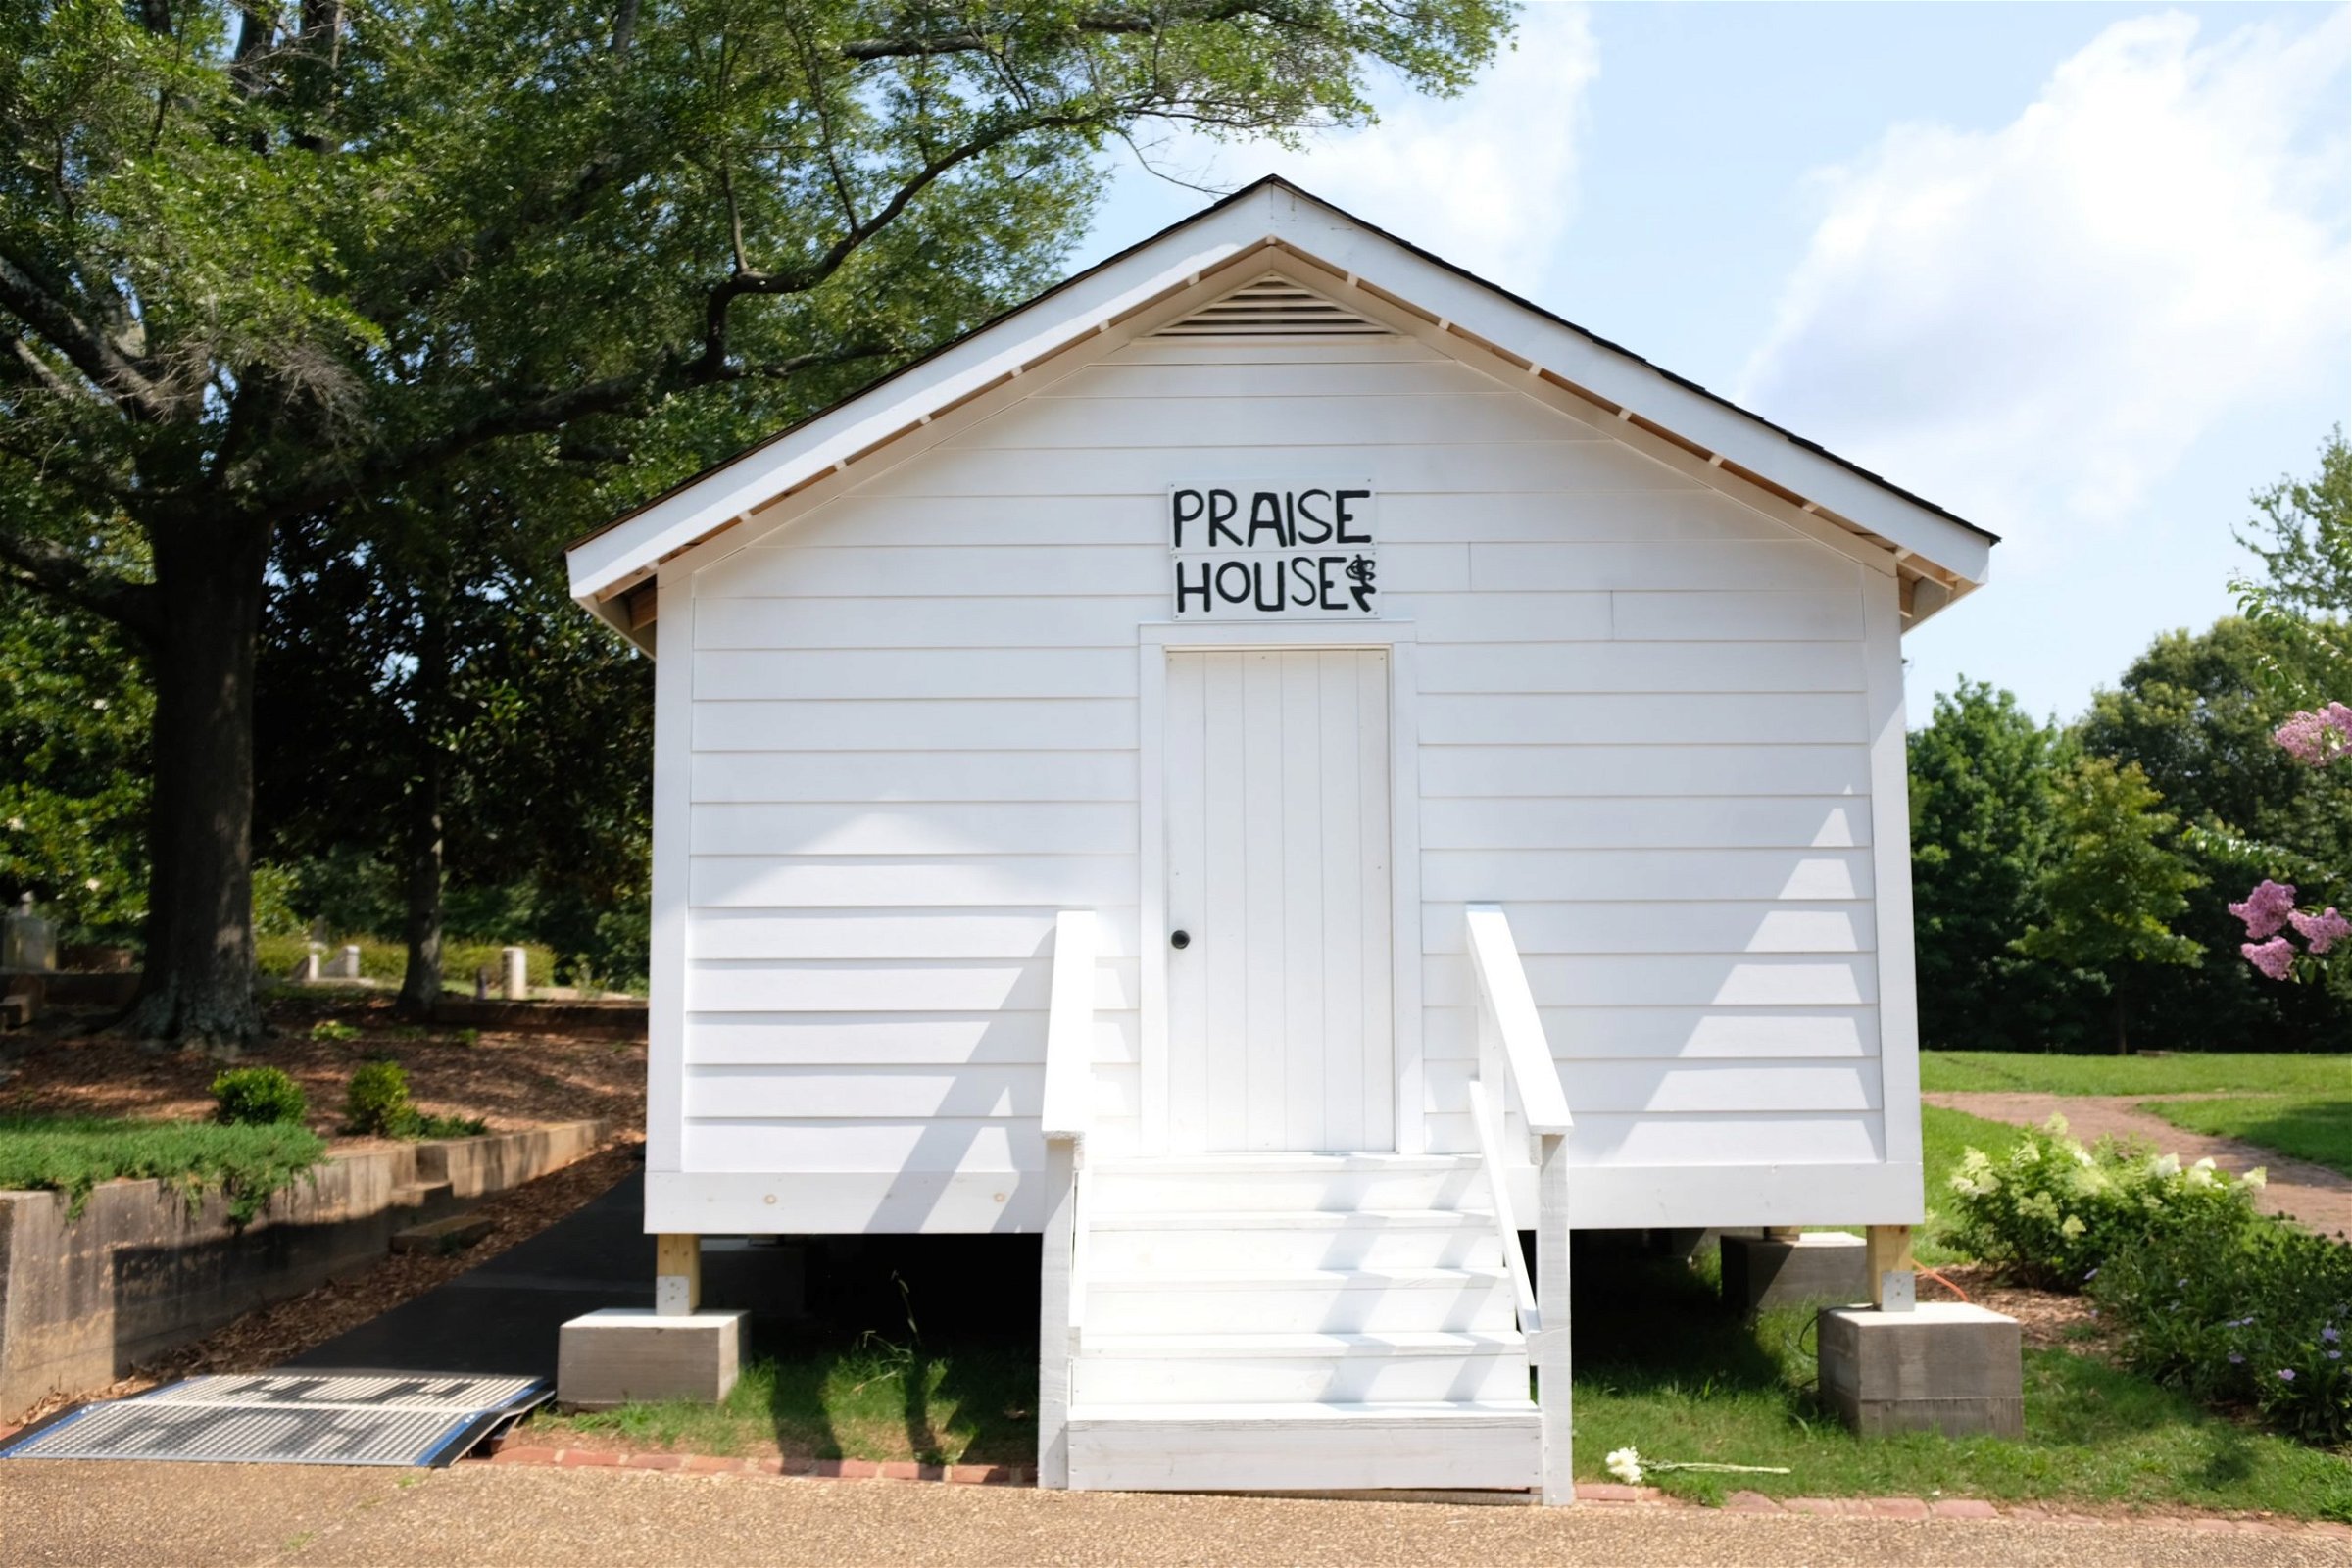 Photo of Praise House